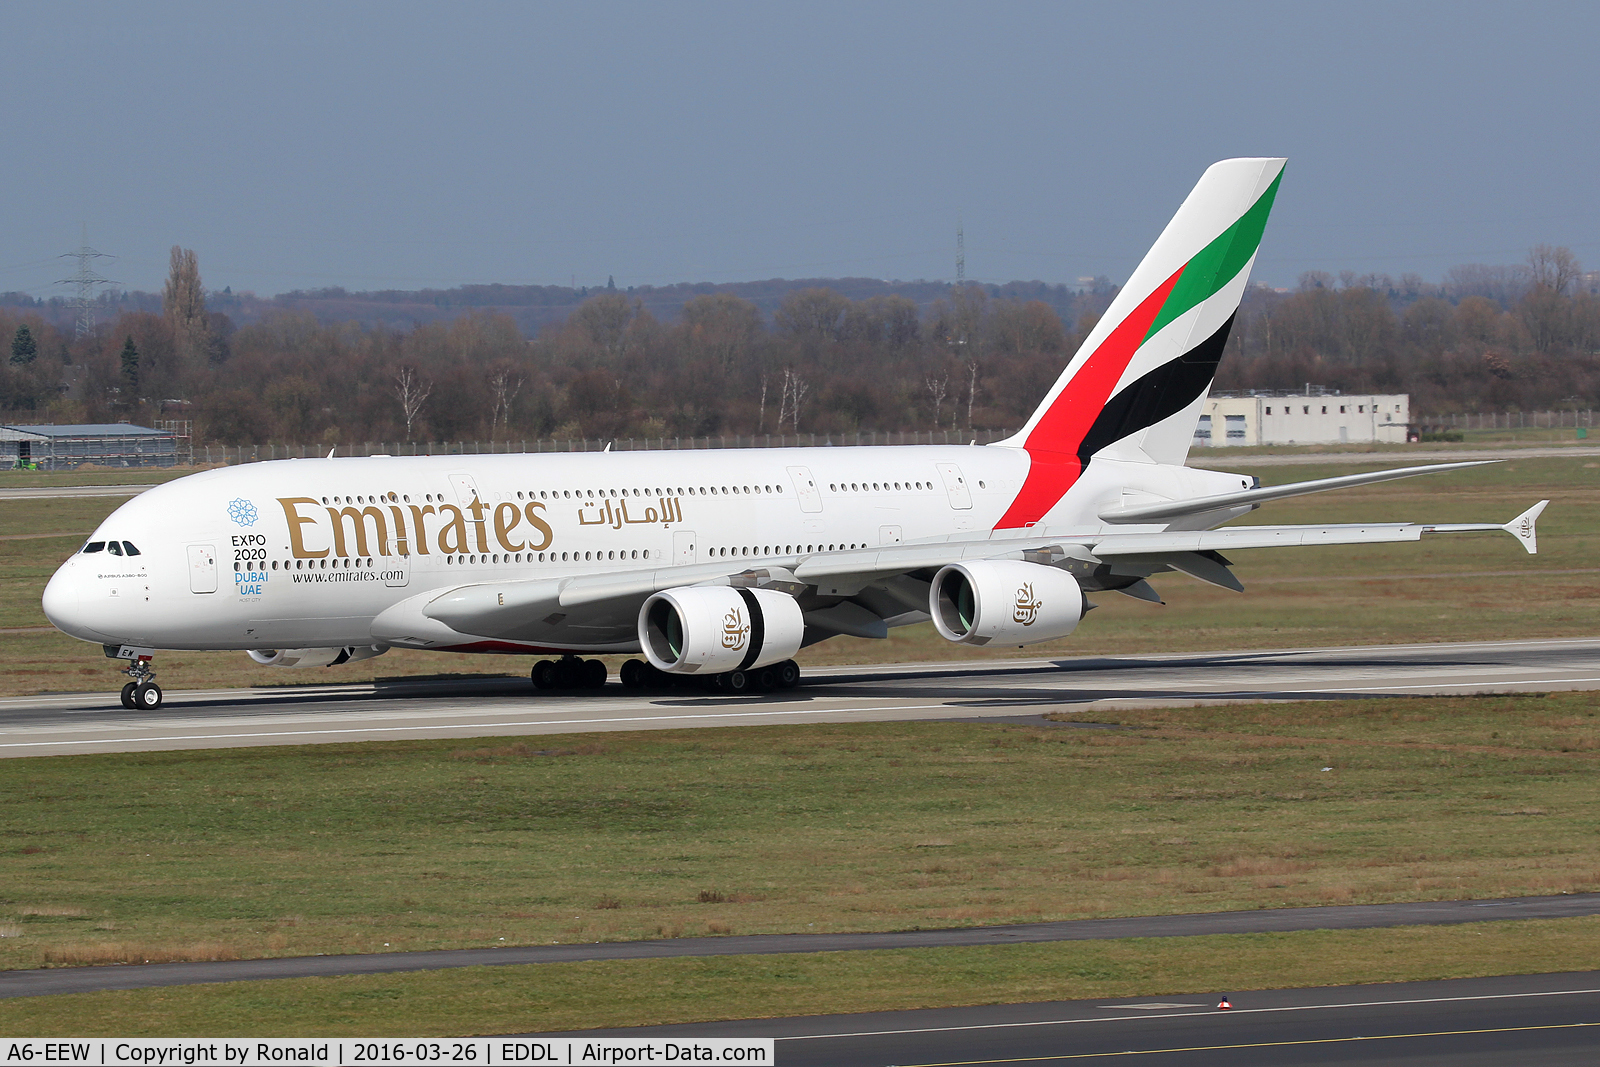 A6-EEW, 2013 Airbus A380-861 C/N 153, at dus